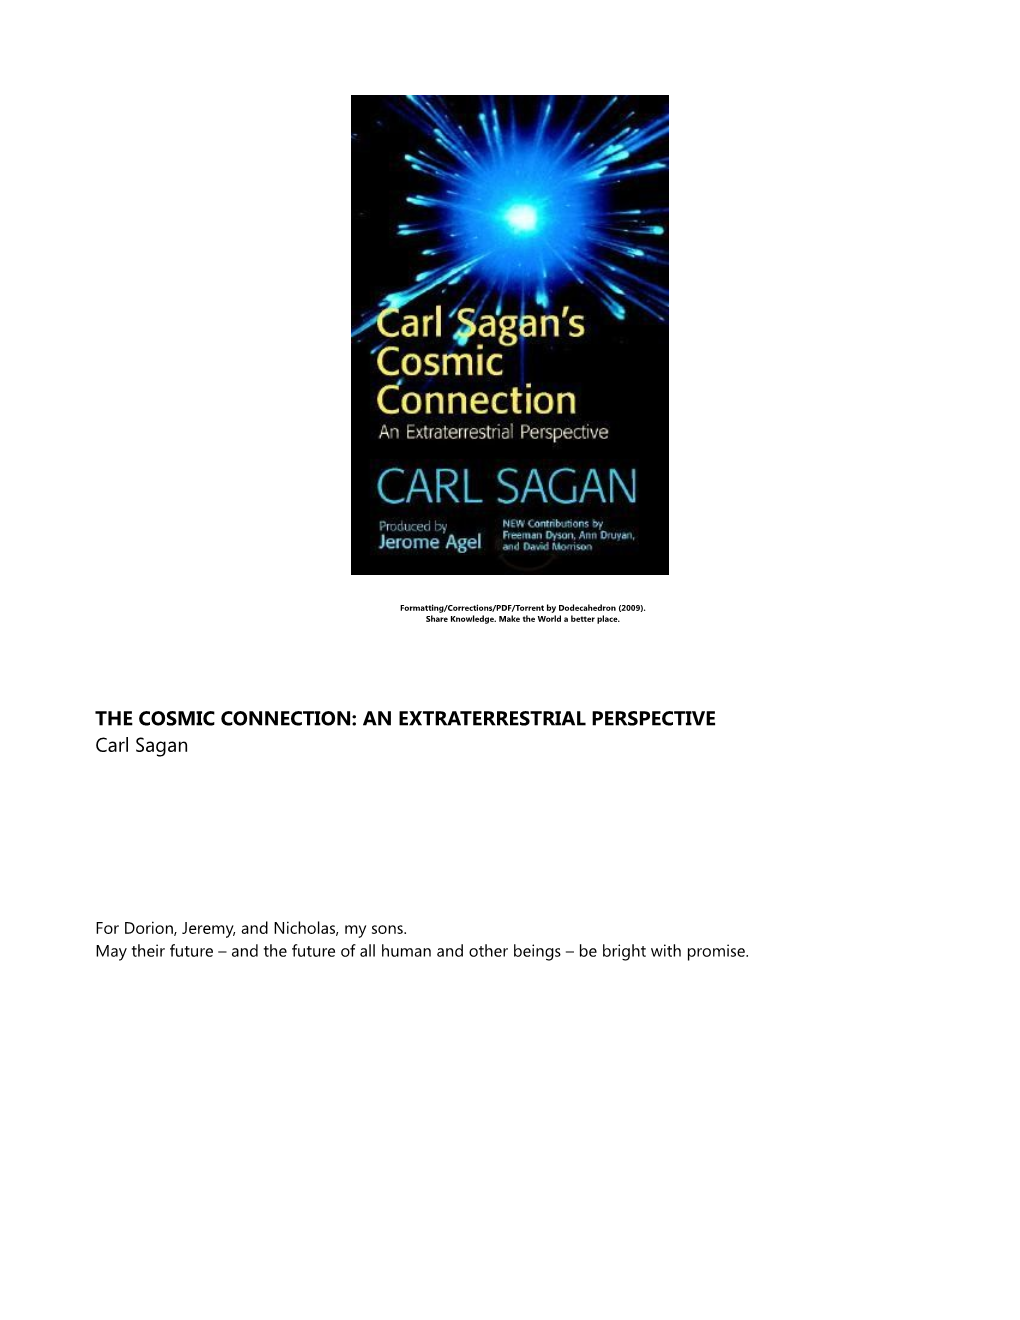 AN EXTRATERRESTRIAL PERSPECTIVE Carl Sagan